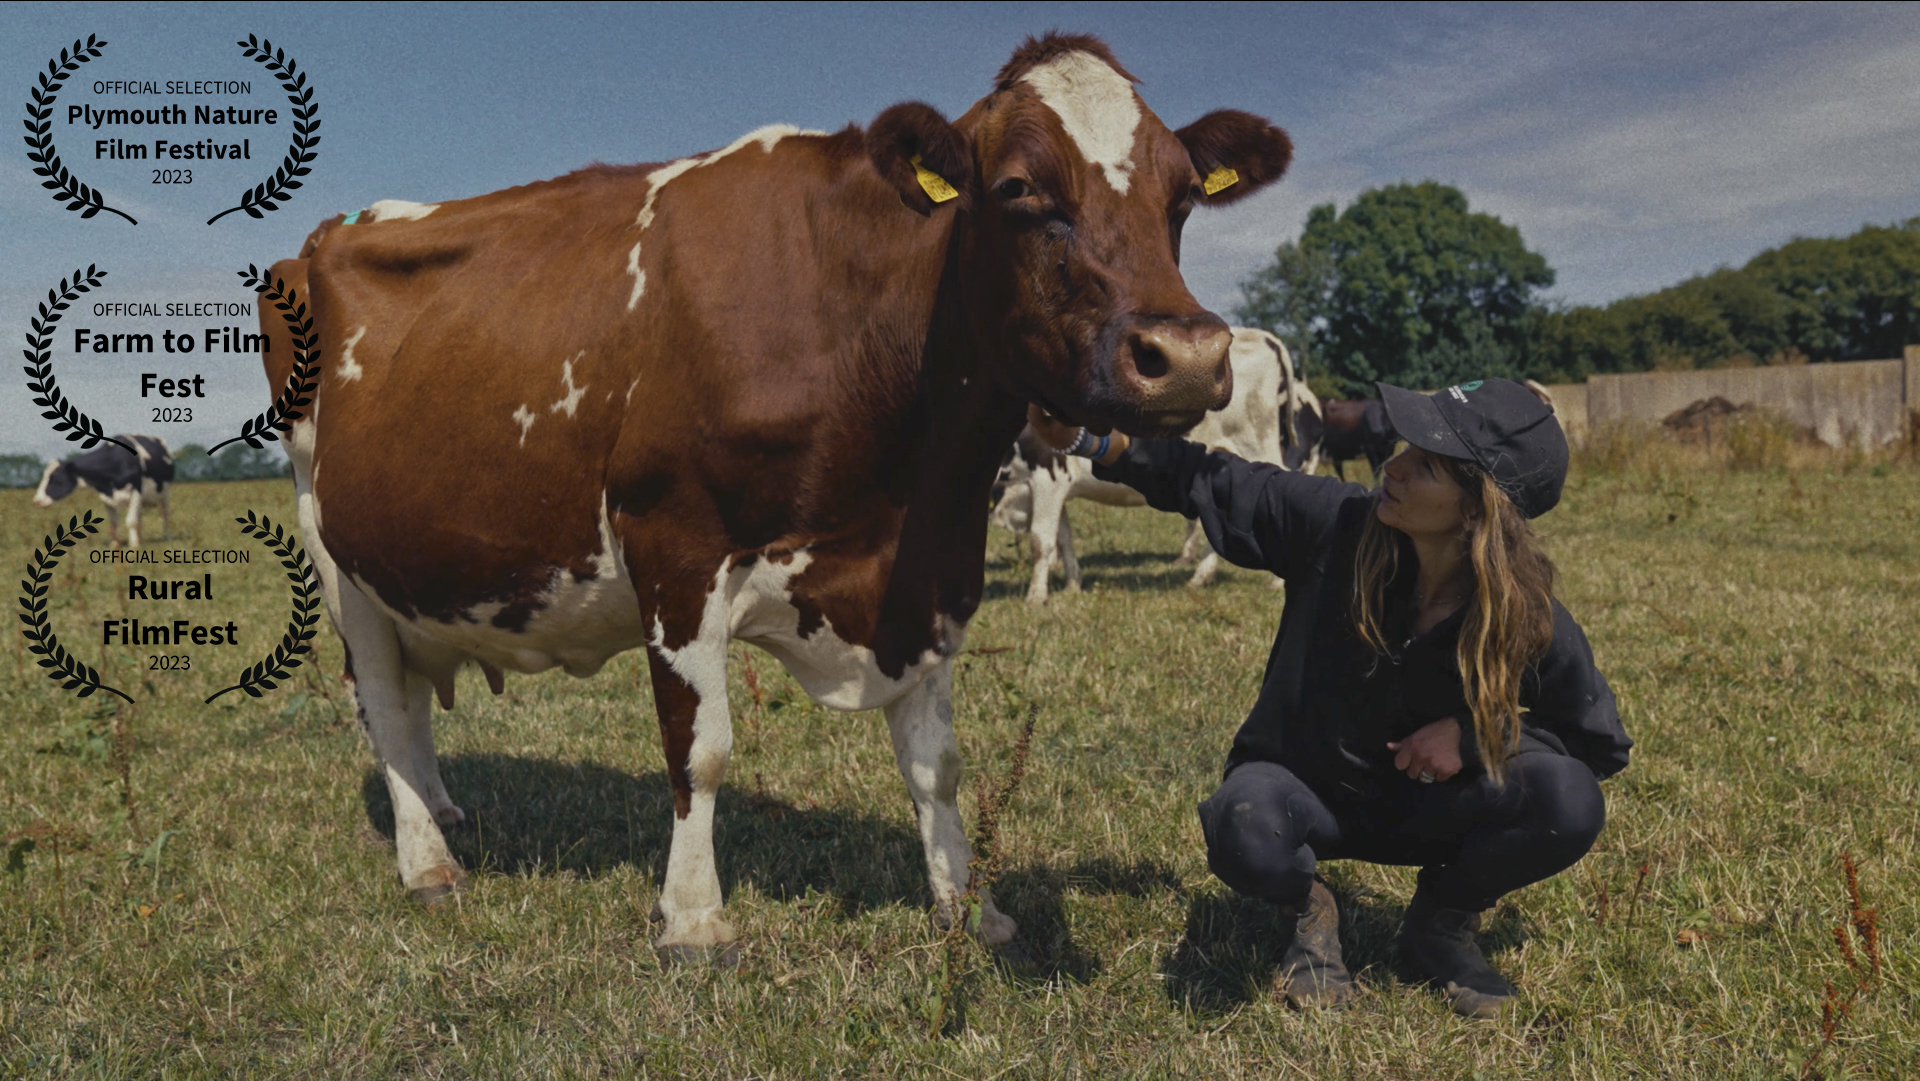 The Dairy Farmer - Moving Image - Chris Baker - Photographer